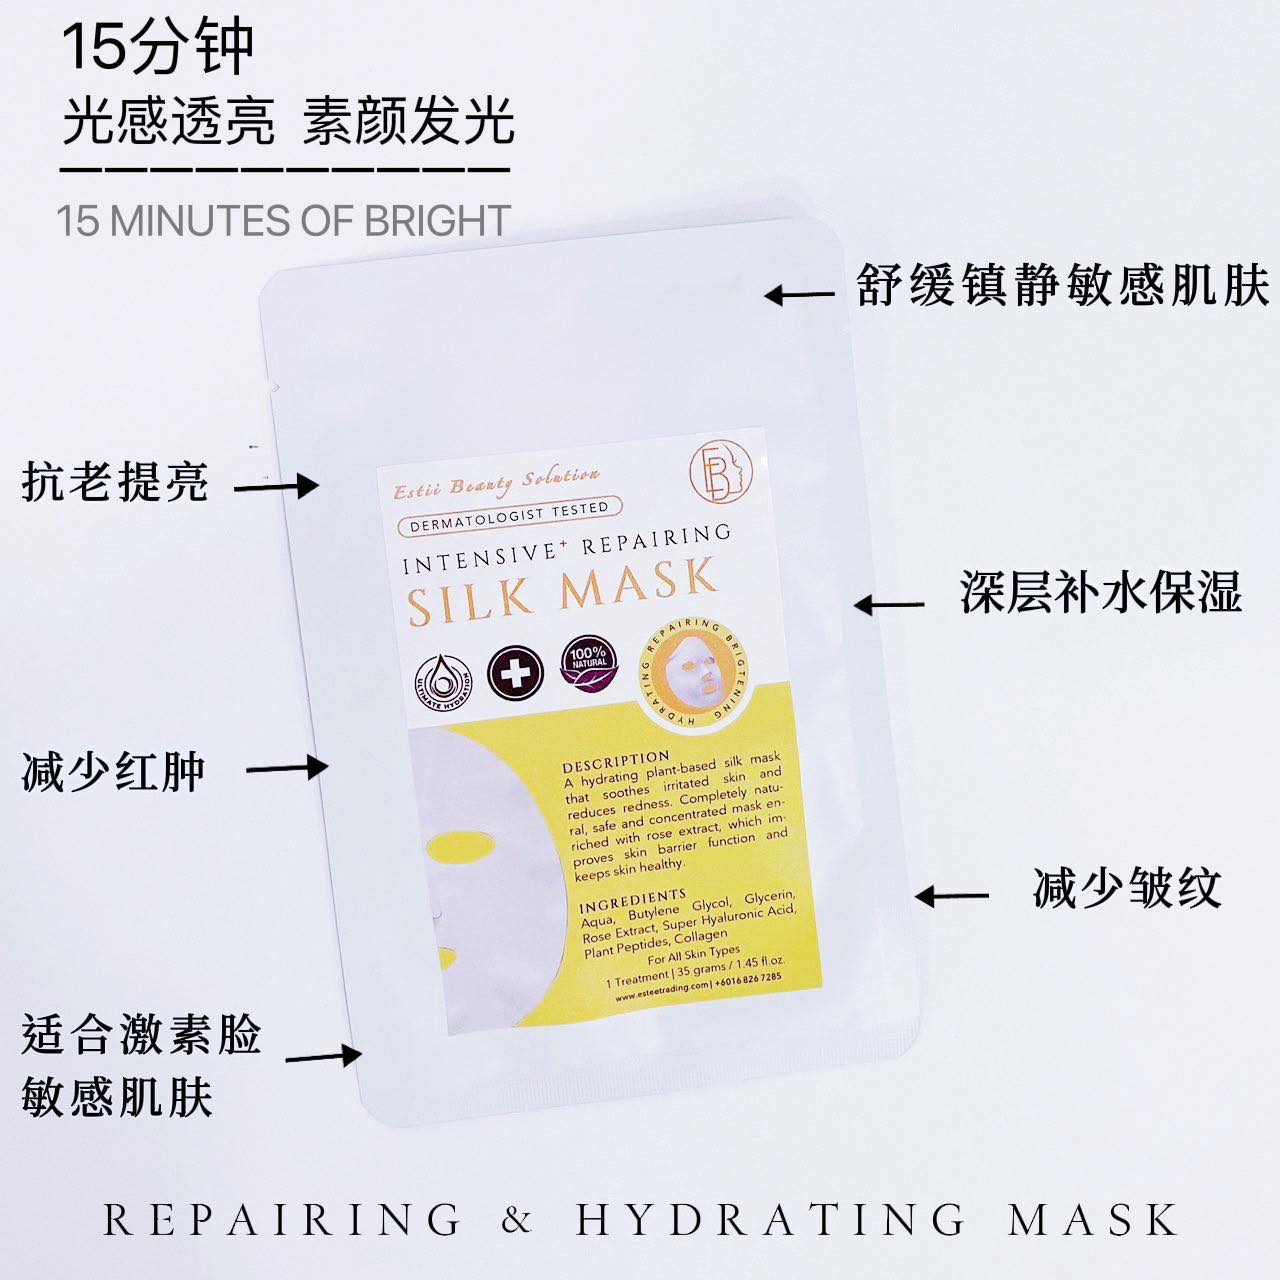 『医美镇定修复抗炎提亮』蚕丝冰膜&Aesthetic Medical Intensive Repairing&Hydrating Soothing Silk Mask (1-PC)